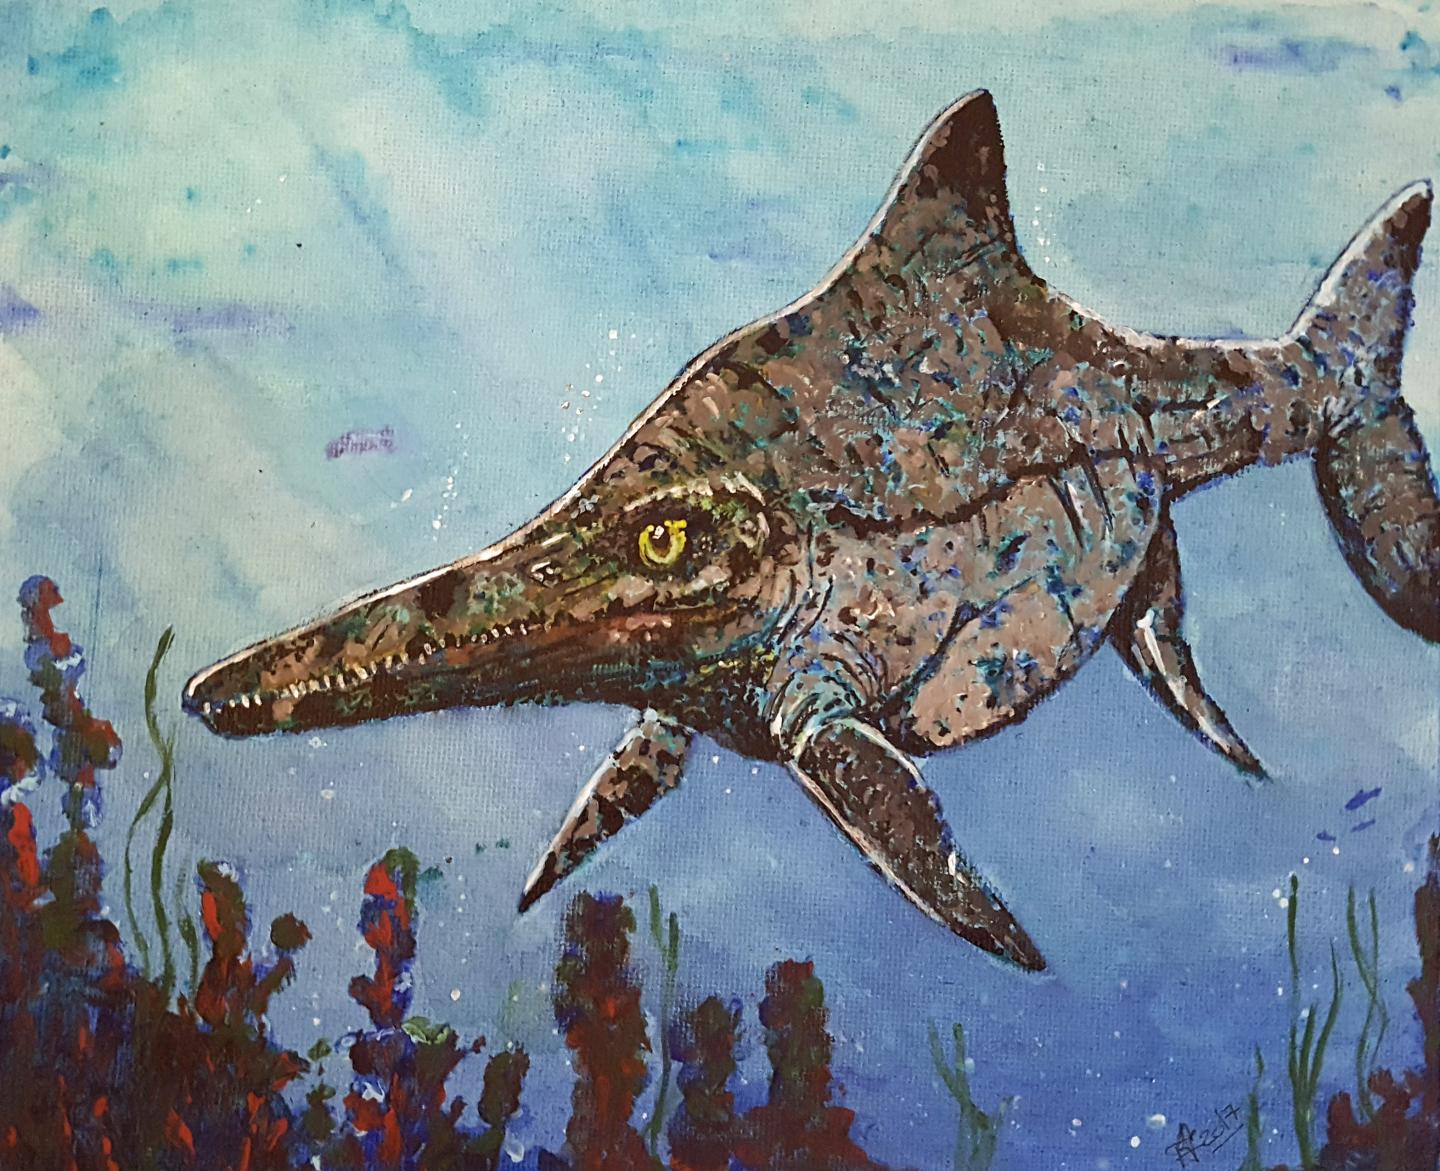 Artwork with Single Ichthyosaur